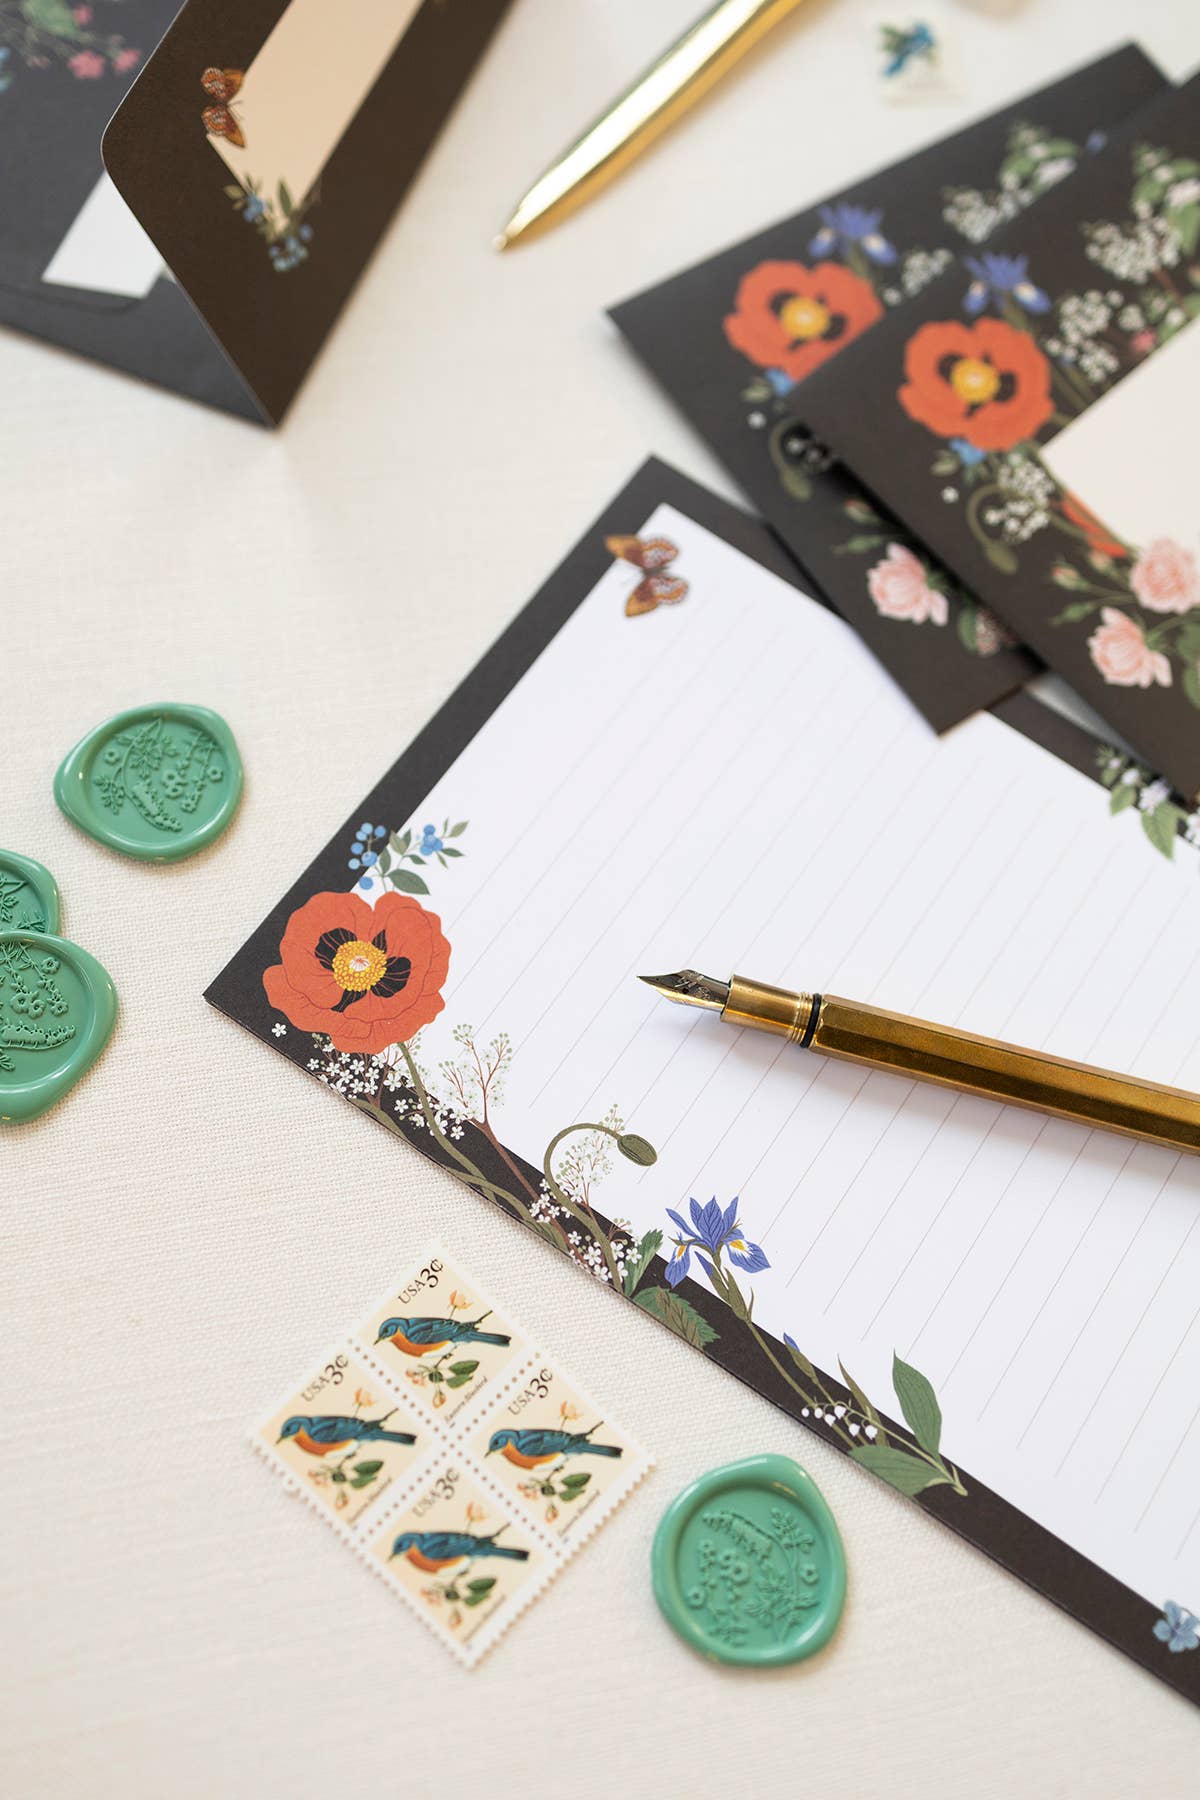 Botanica Paper Co. - WILD FLOWERS / Letter Writing Set